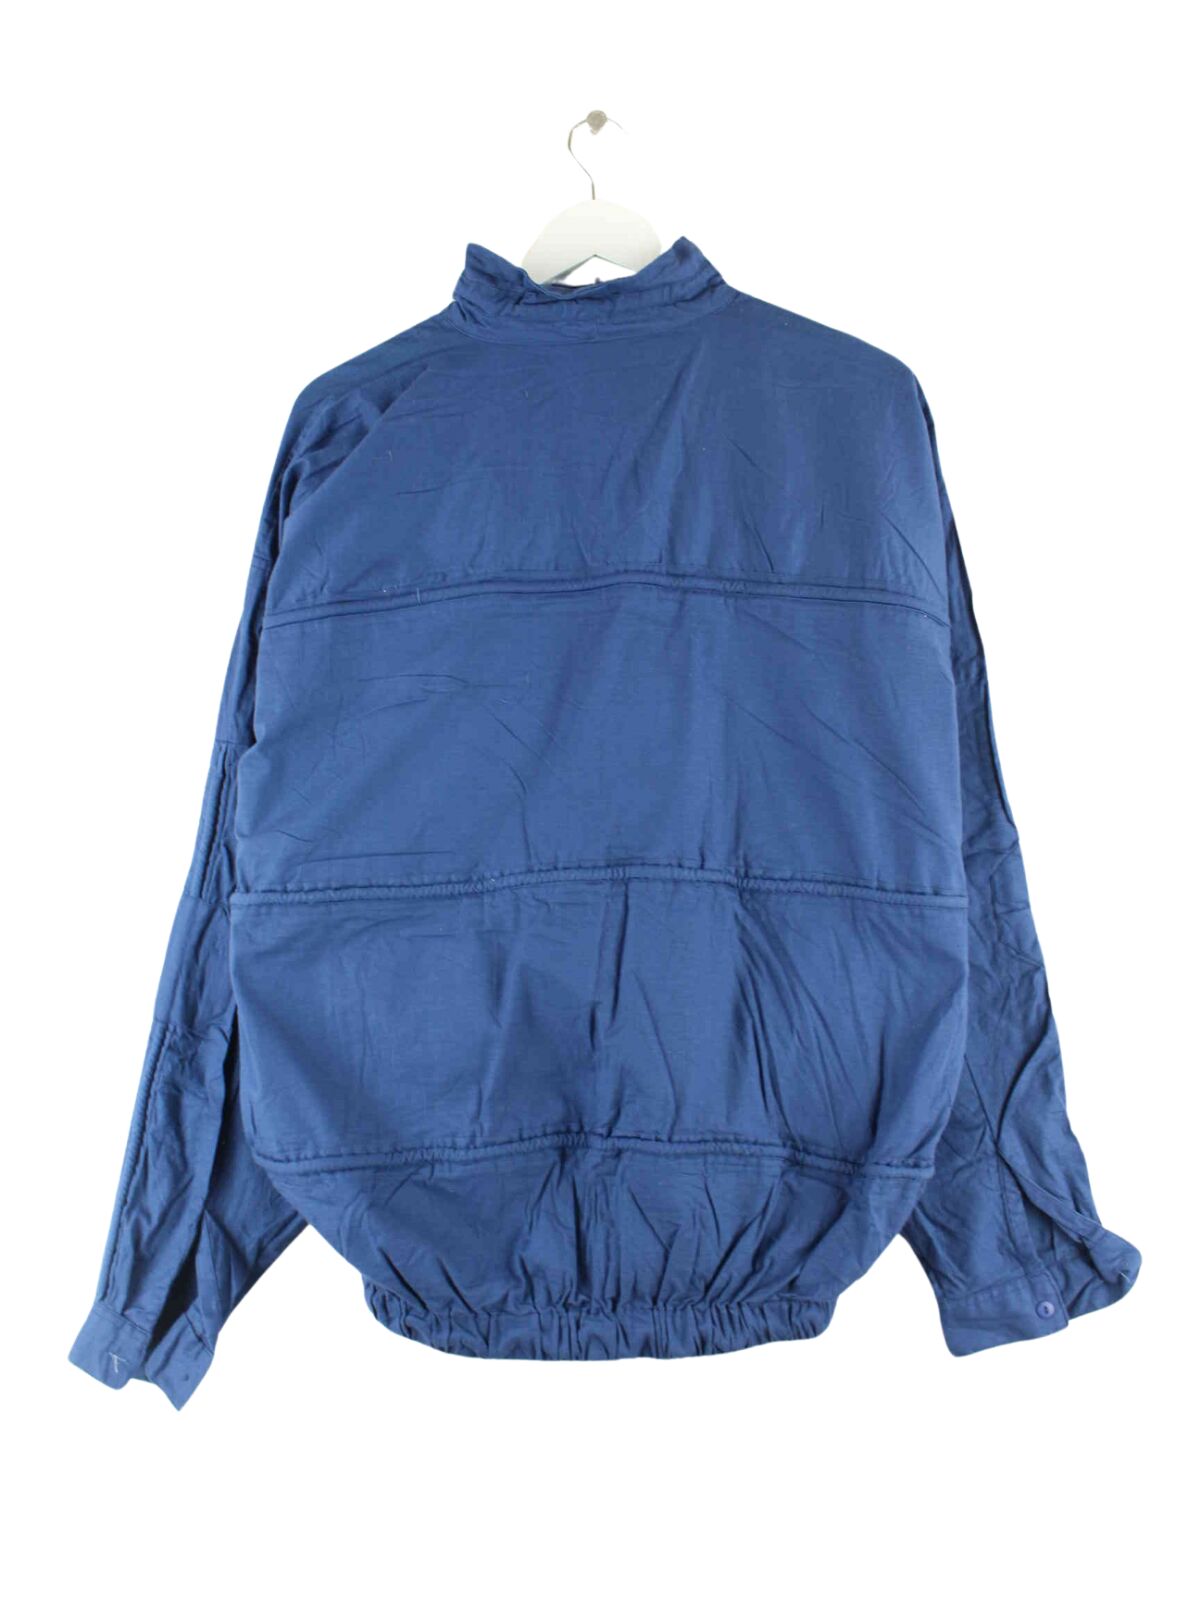 Kenzo 90s Vintage Jacke Blau M (back image)